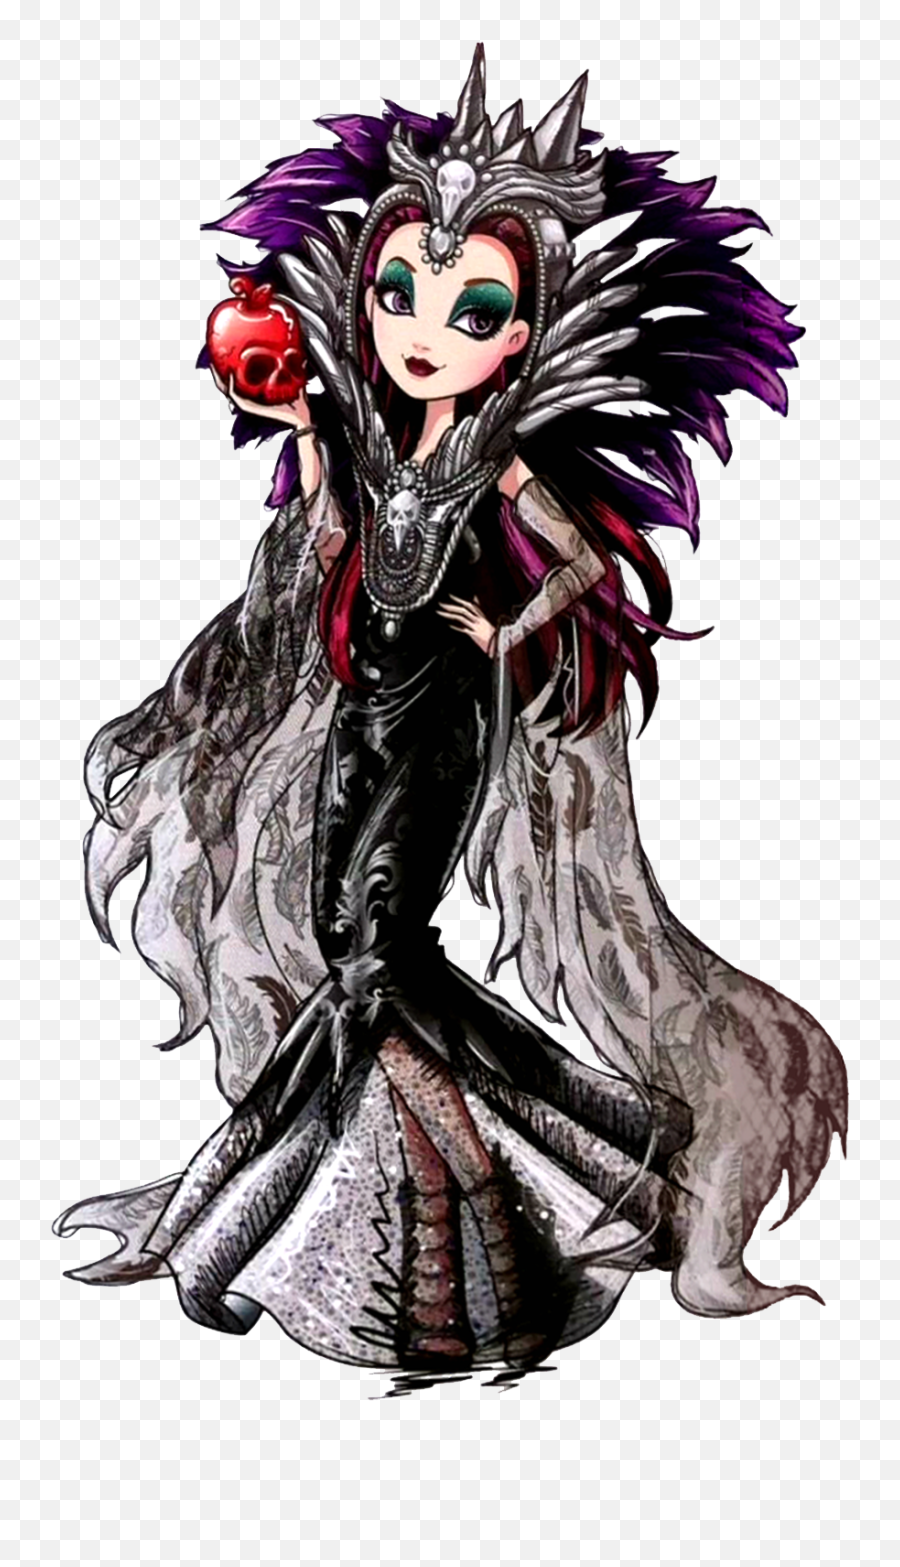 Raven Queen - Spellbinding Raven Queen Doll Full Size Png Ever After High Spellbinding Raven Queen,Doll Png